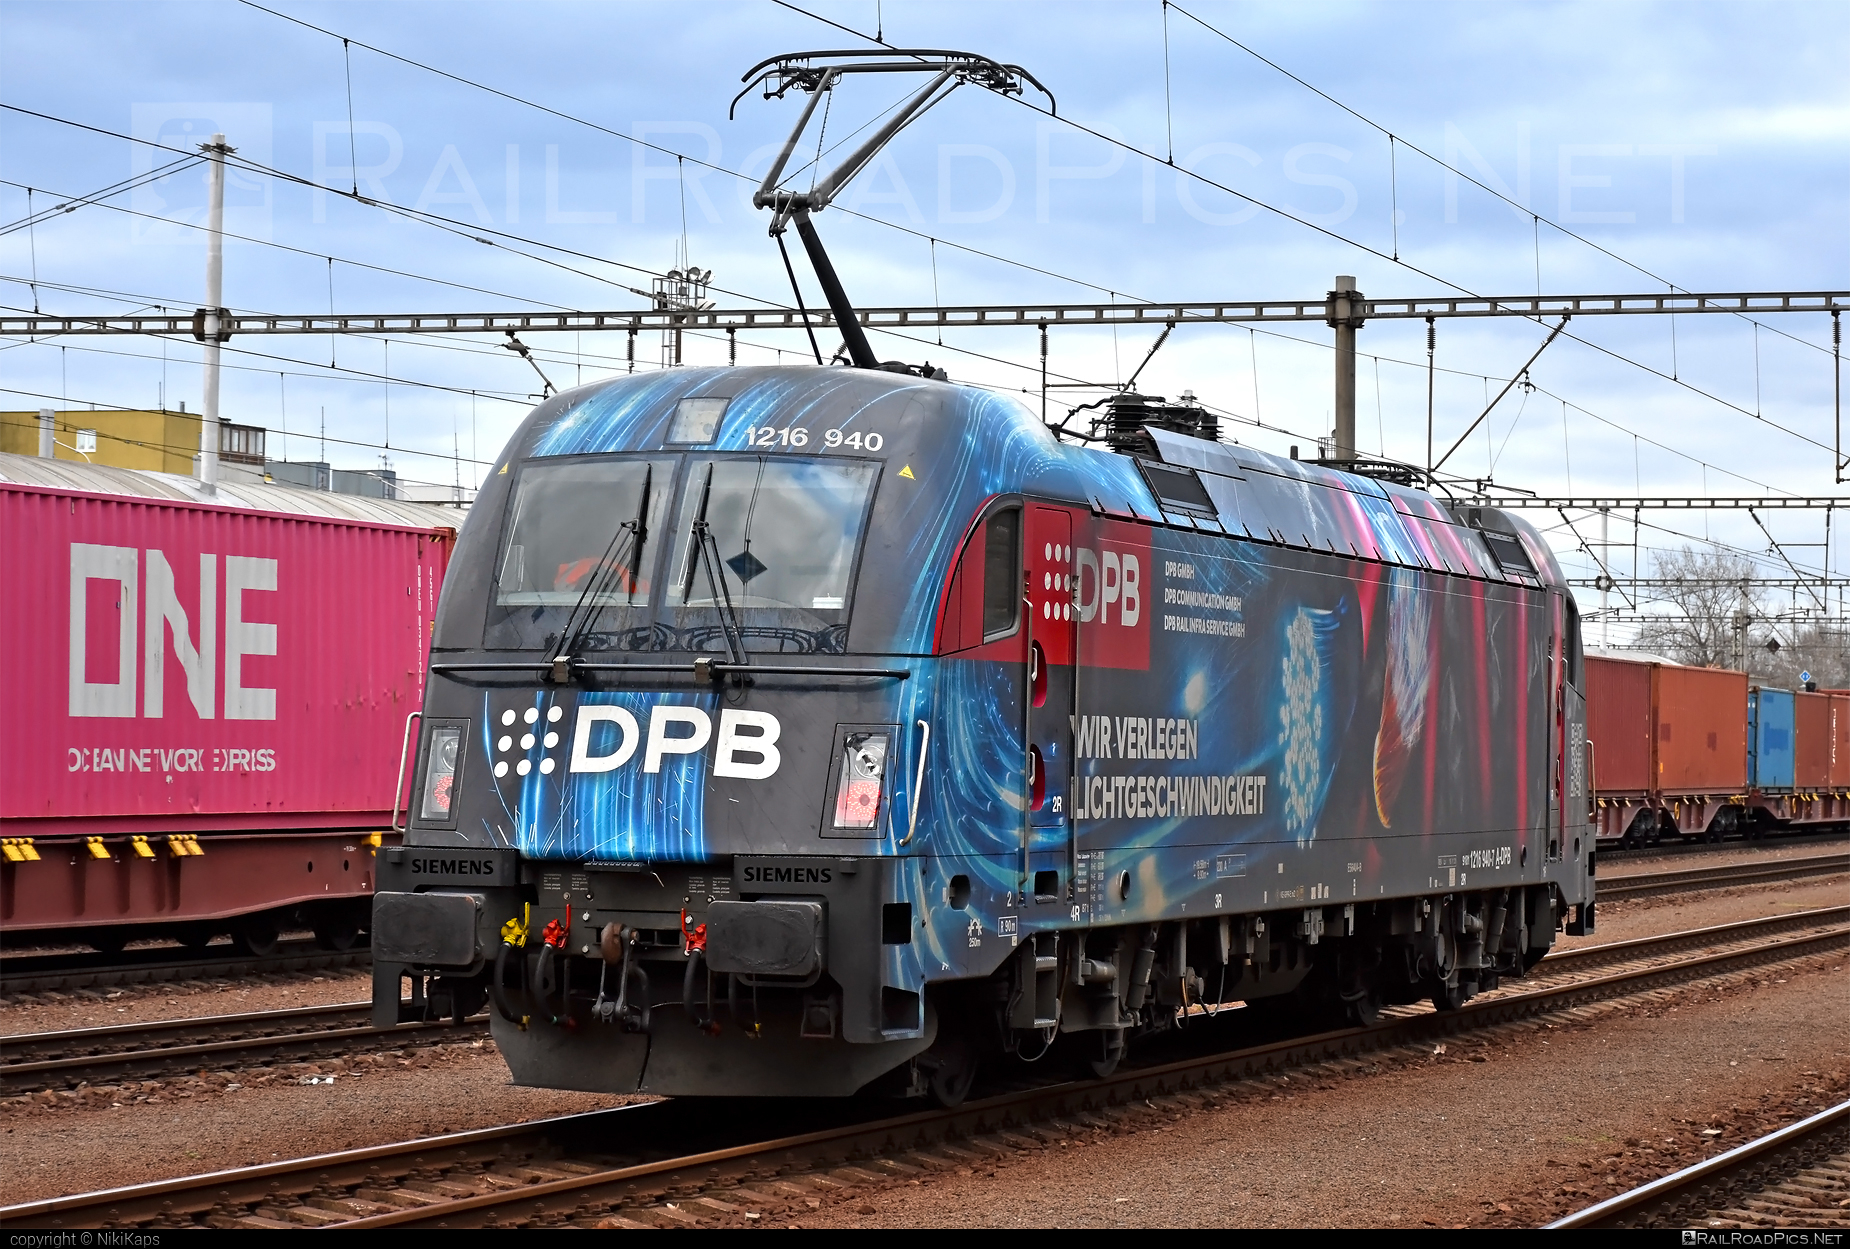 Siemens ES 64 U4 - 1216 940 operated by DPB Rail Infra Service GmbH #dpb #dpbRailInfraService #dpbRailInfraServiceGmbh #es64 #es64u4 #eurosprinter #siemens #siemenses64 #siemenses64u4 #siemenstaurus #taurus #tauruslocomotive